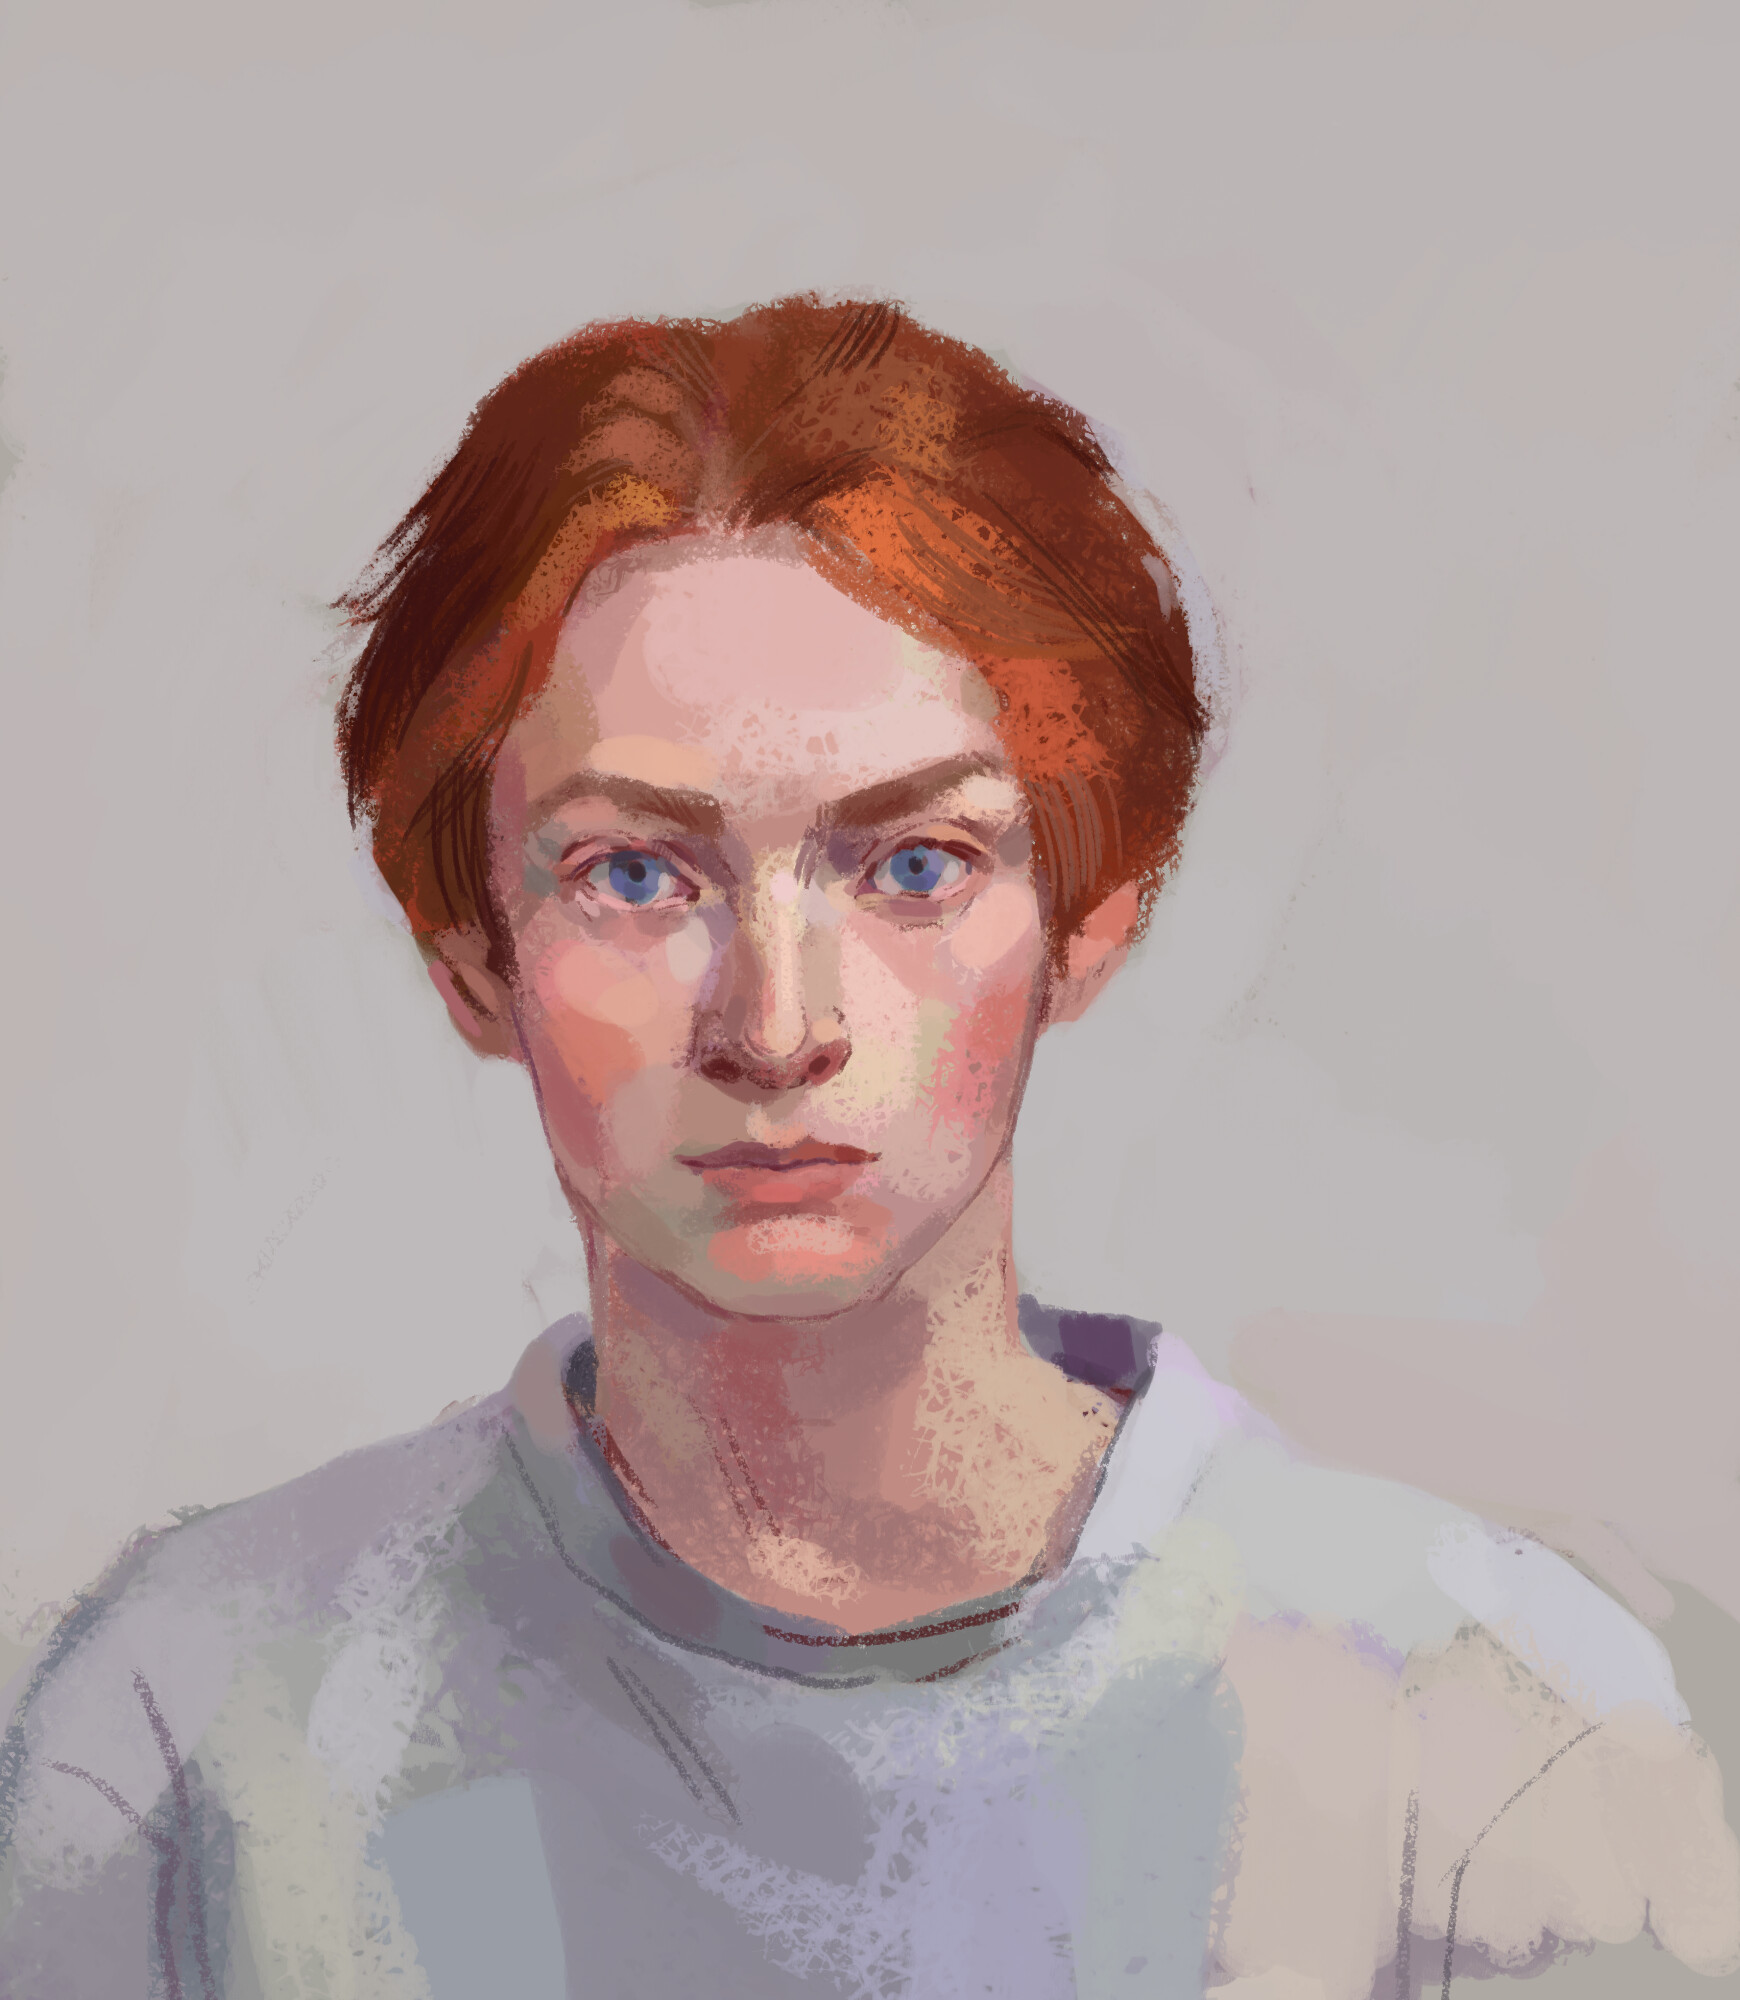 ArtStation - Redhead portrait